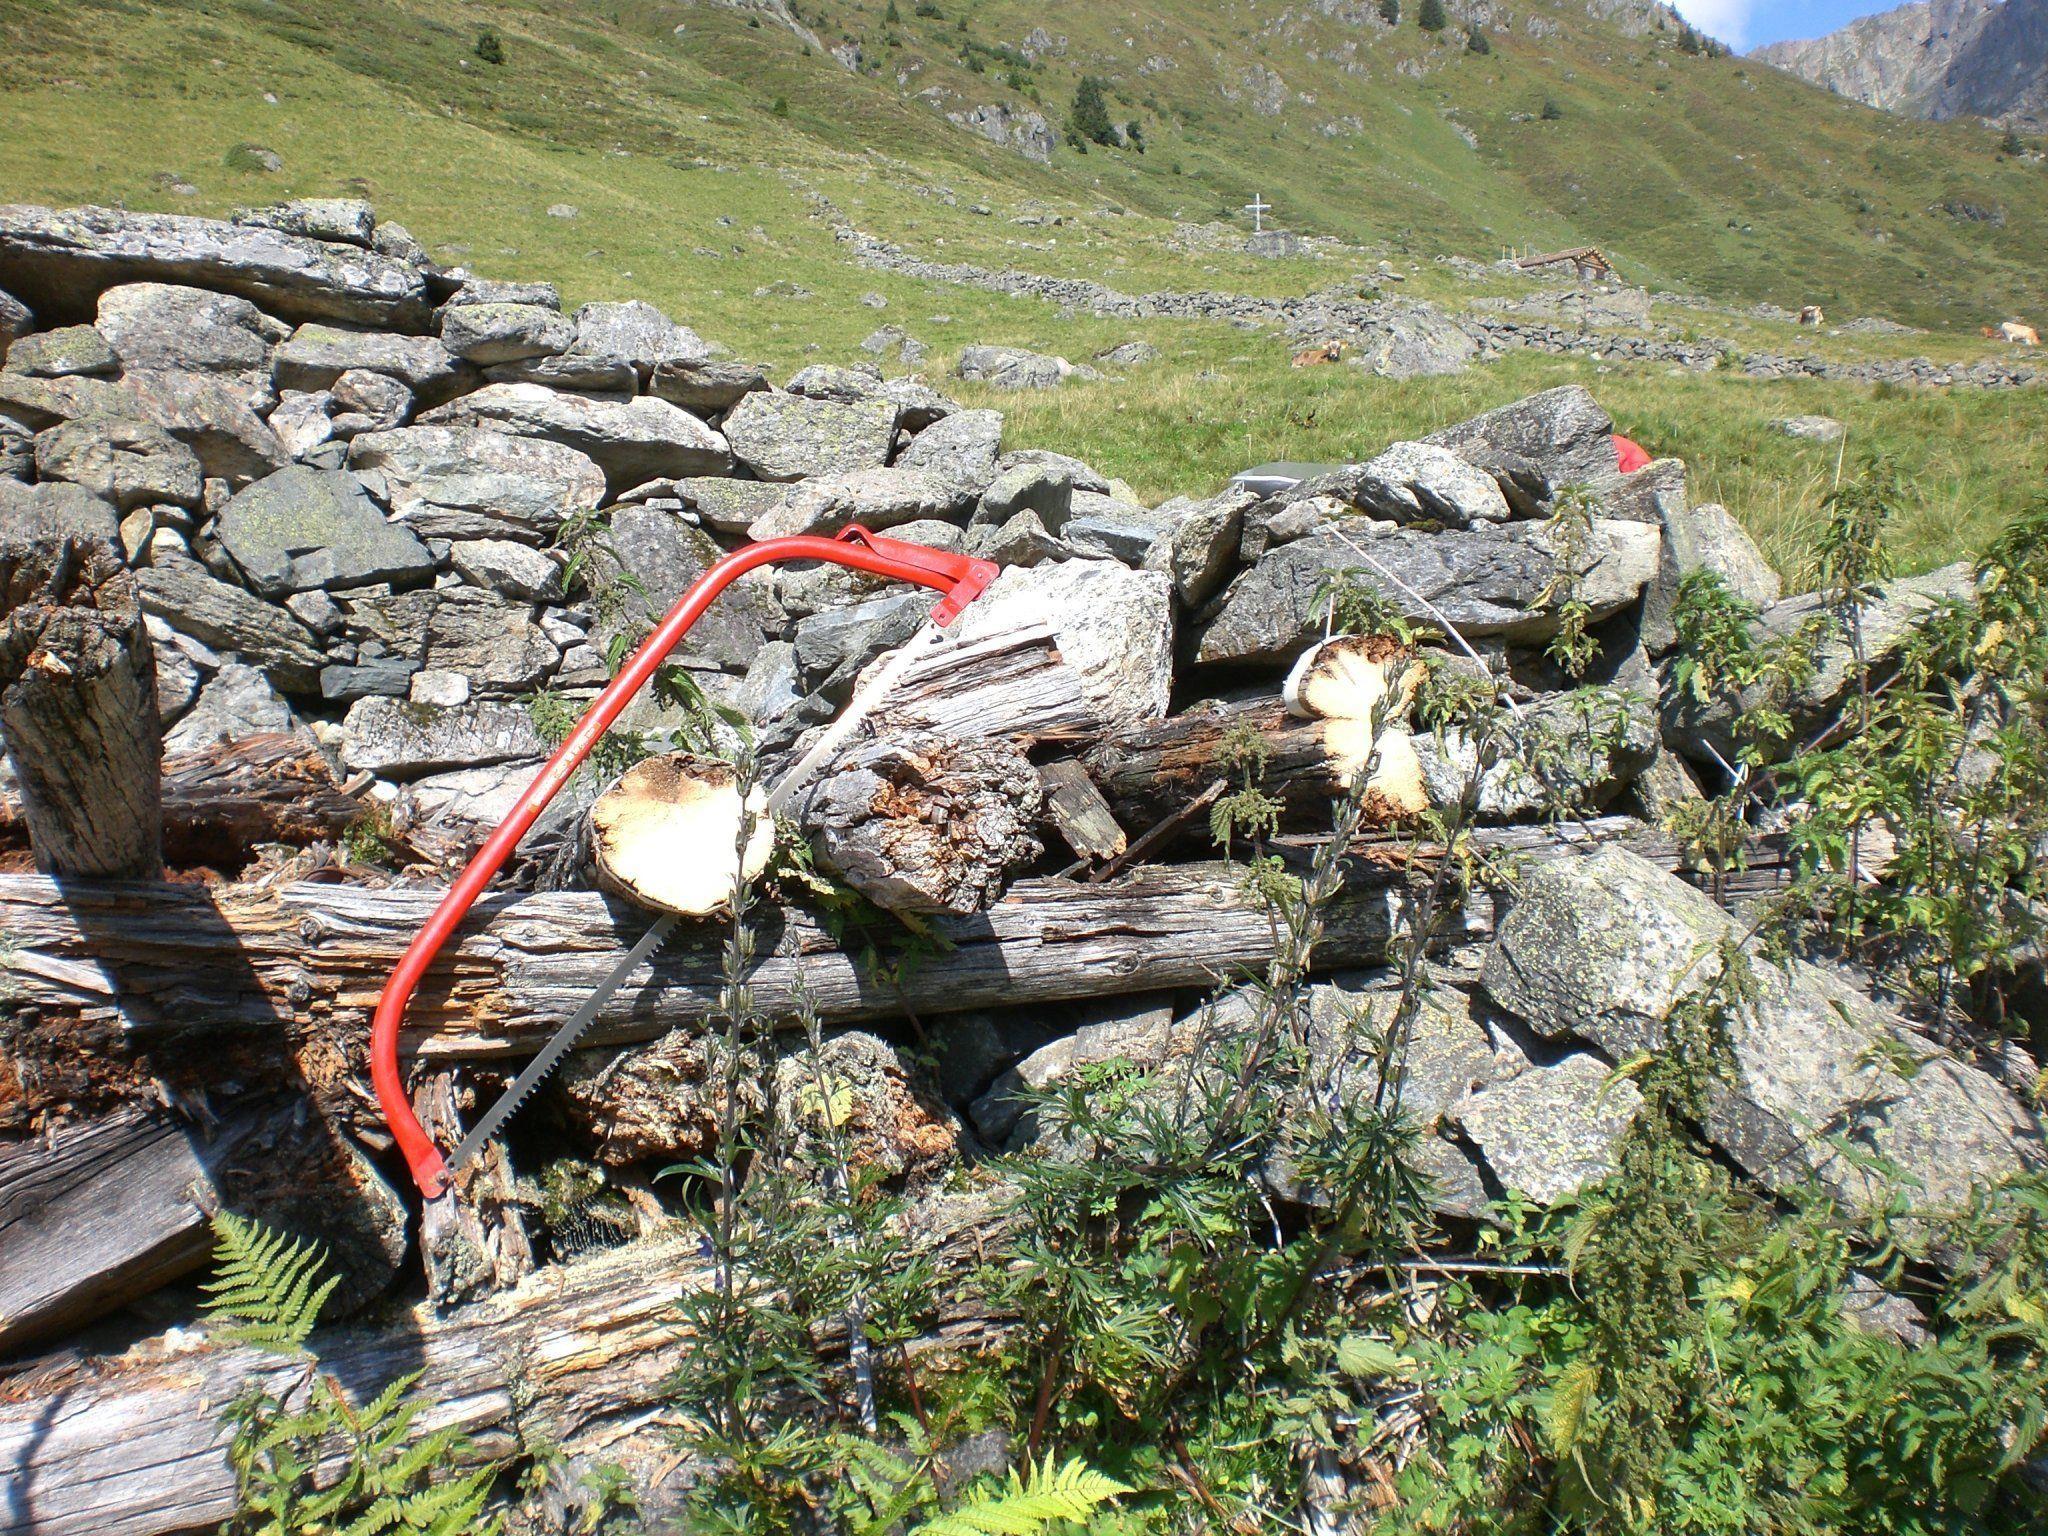 Holzreste alpiner Ruinen lassen interessante Rückschlüsse zu.